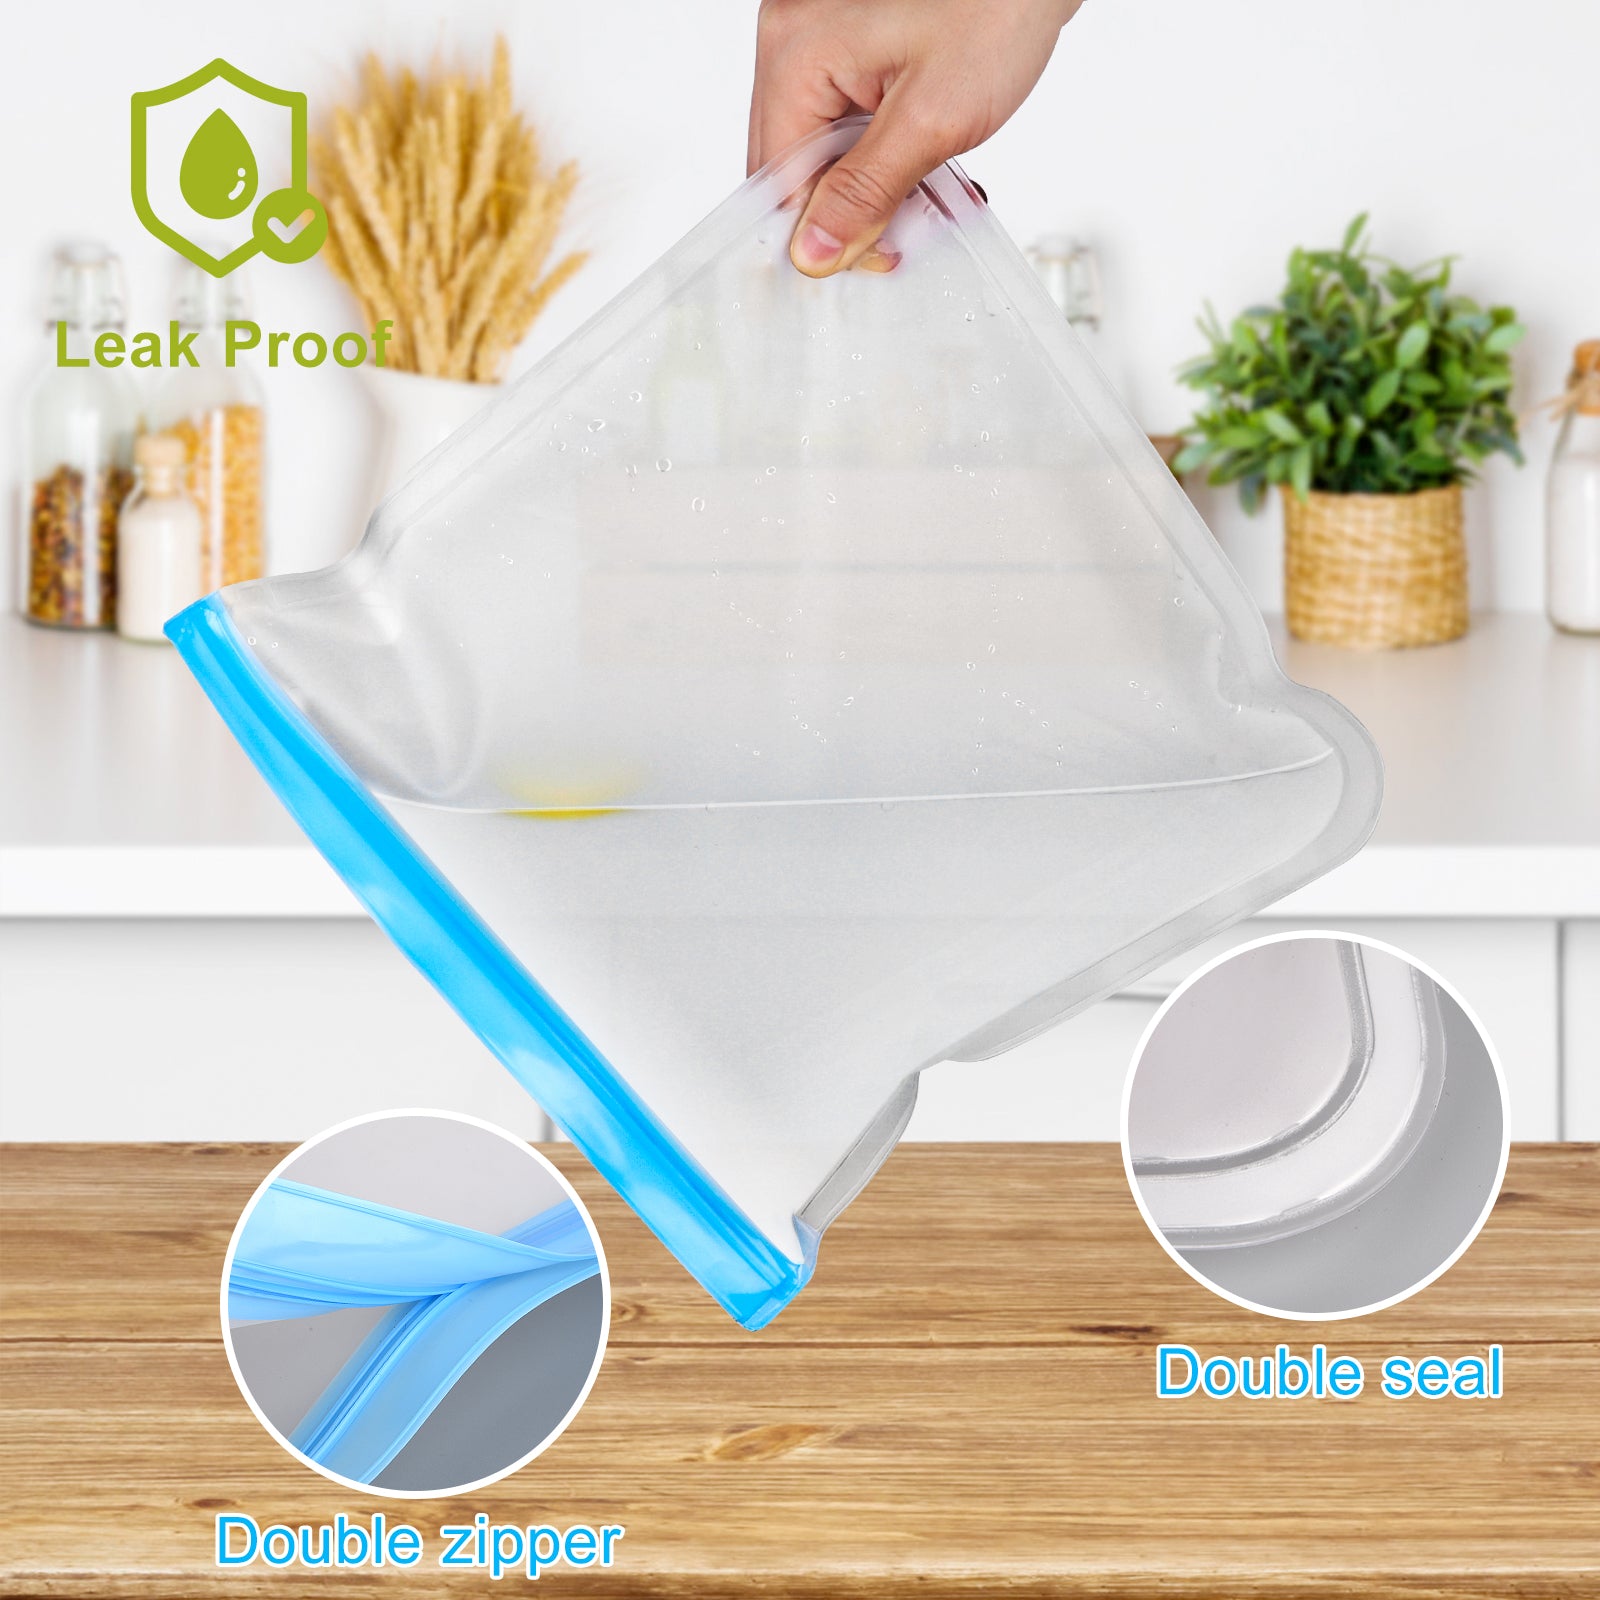 EEEkit 20pcs Reusable Food Ziplock Bags, BPA Free Freezer Bags for Snack Nut Camping, Men's, Size: 4 Sizes